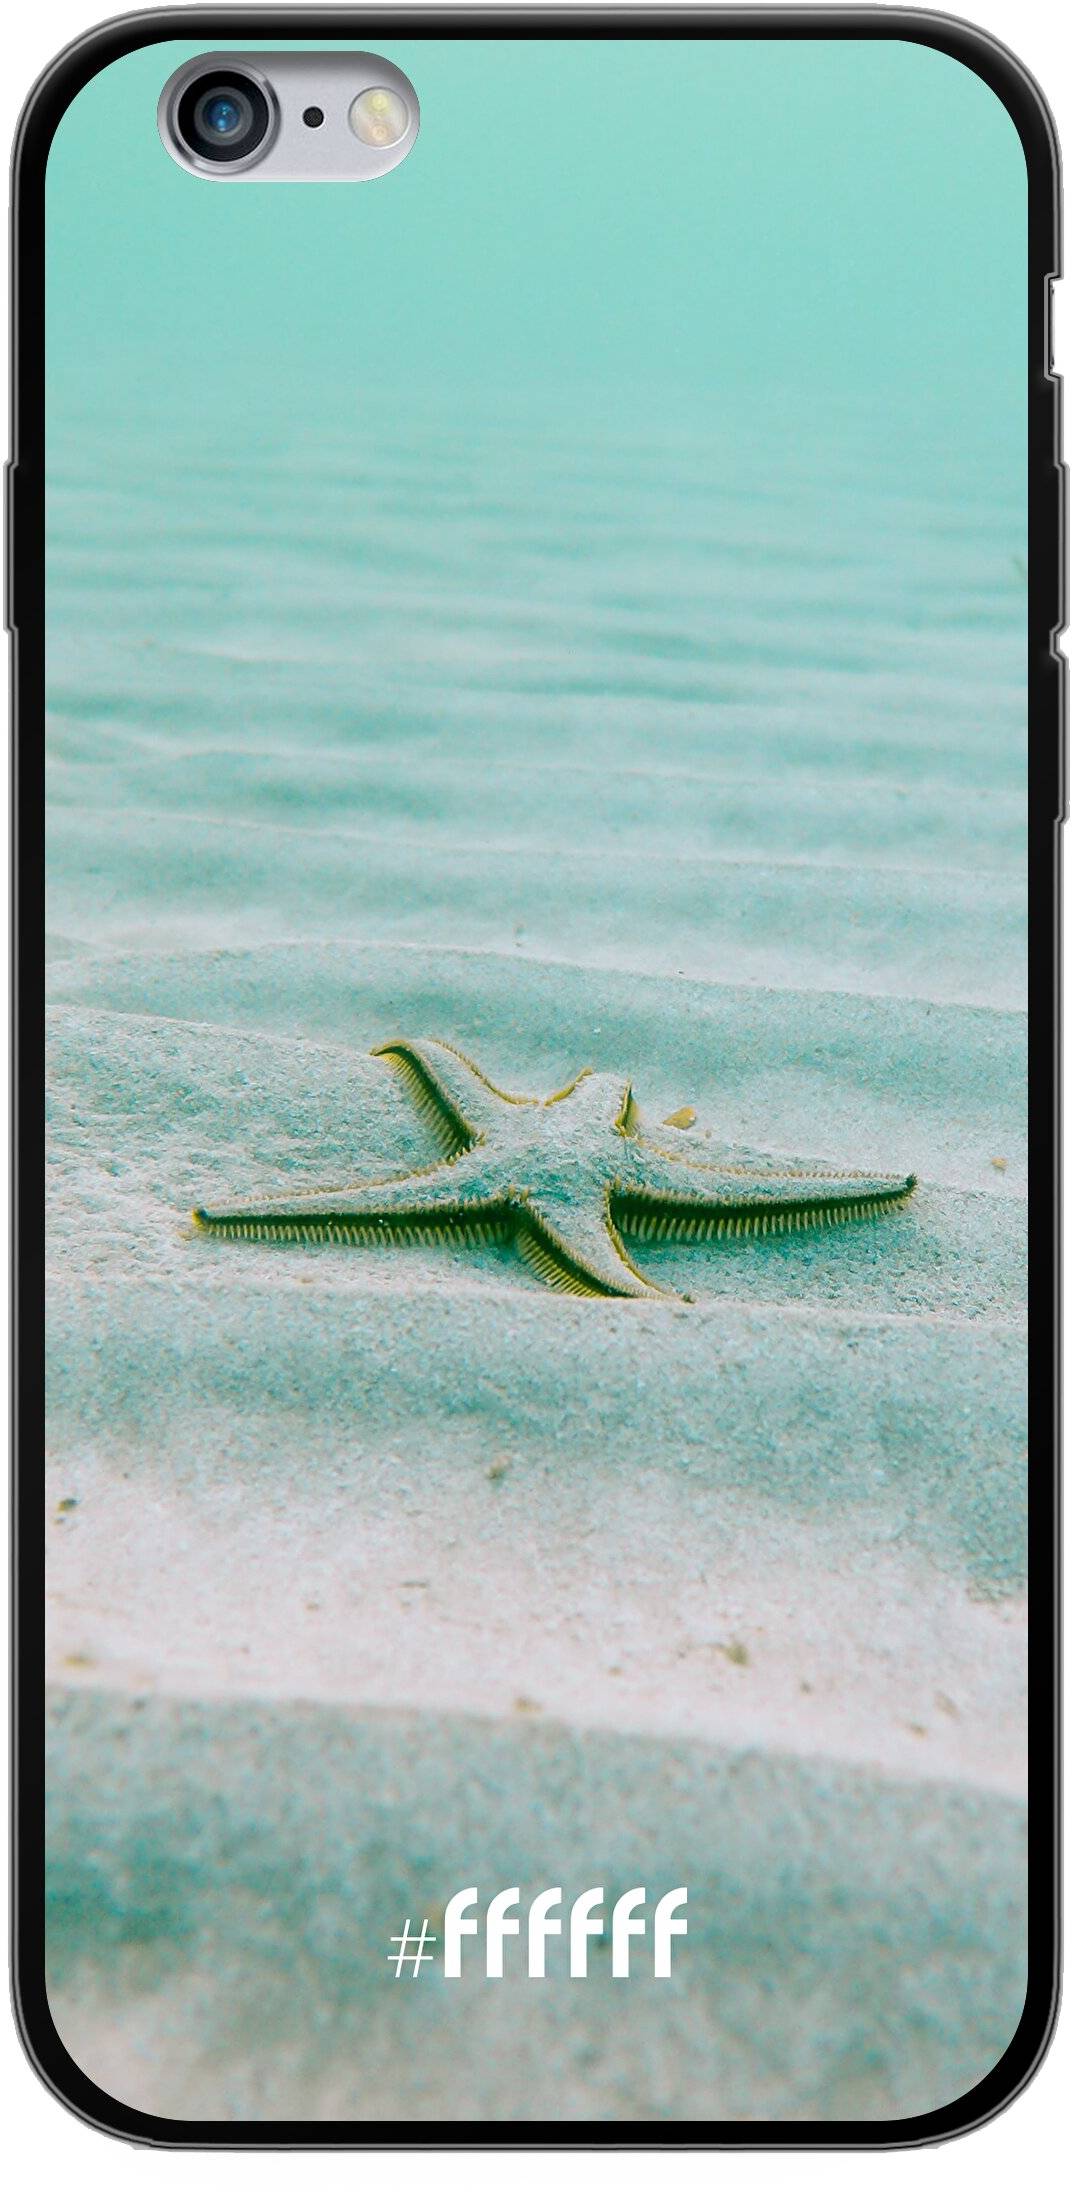 Sea Star iPhone 6